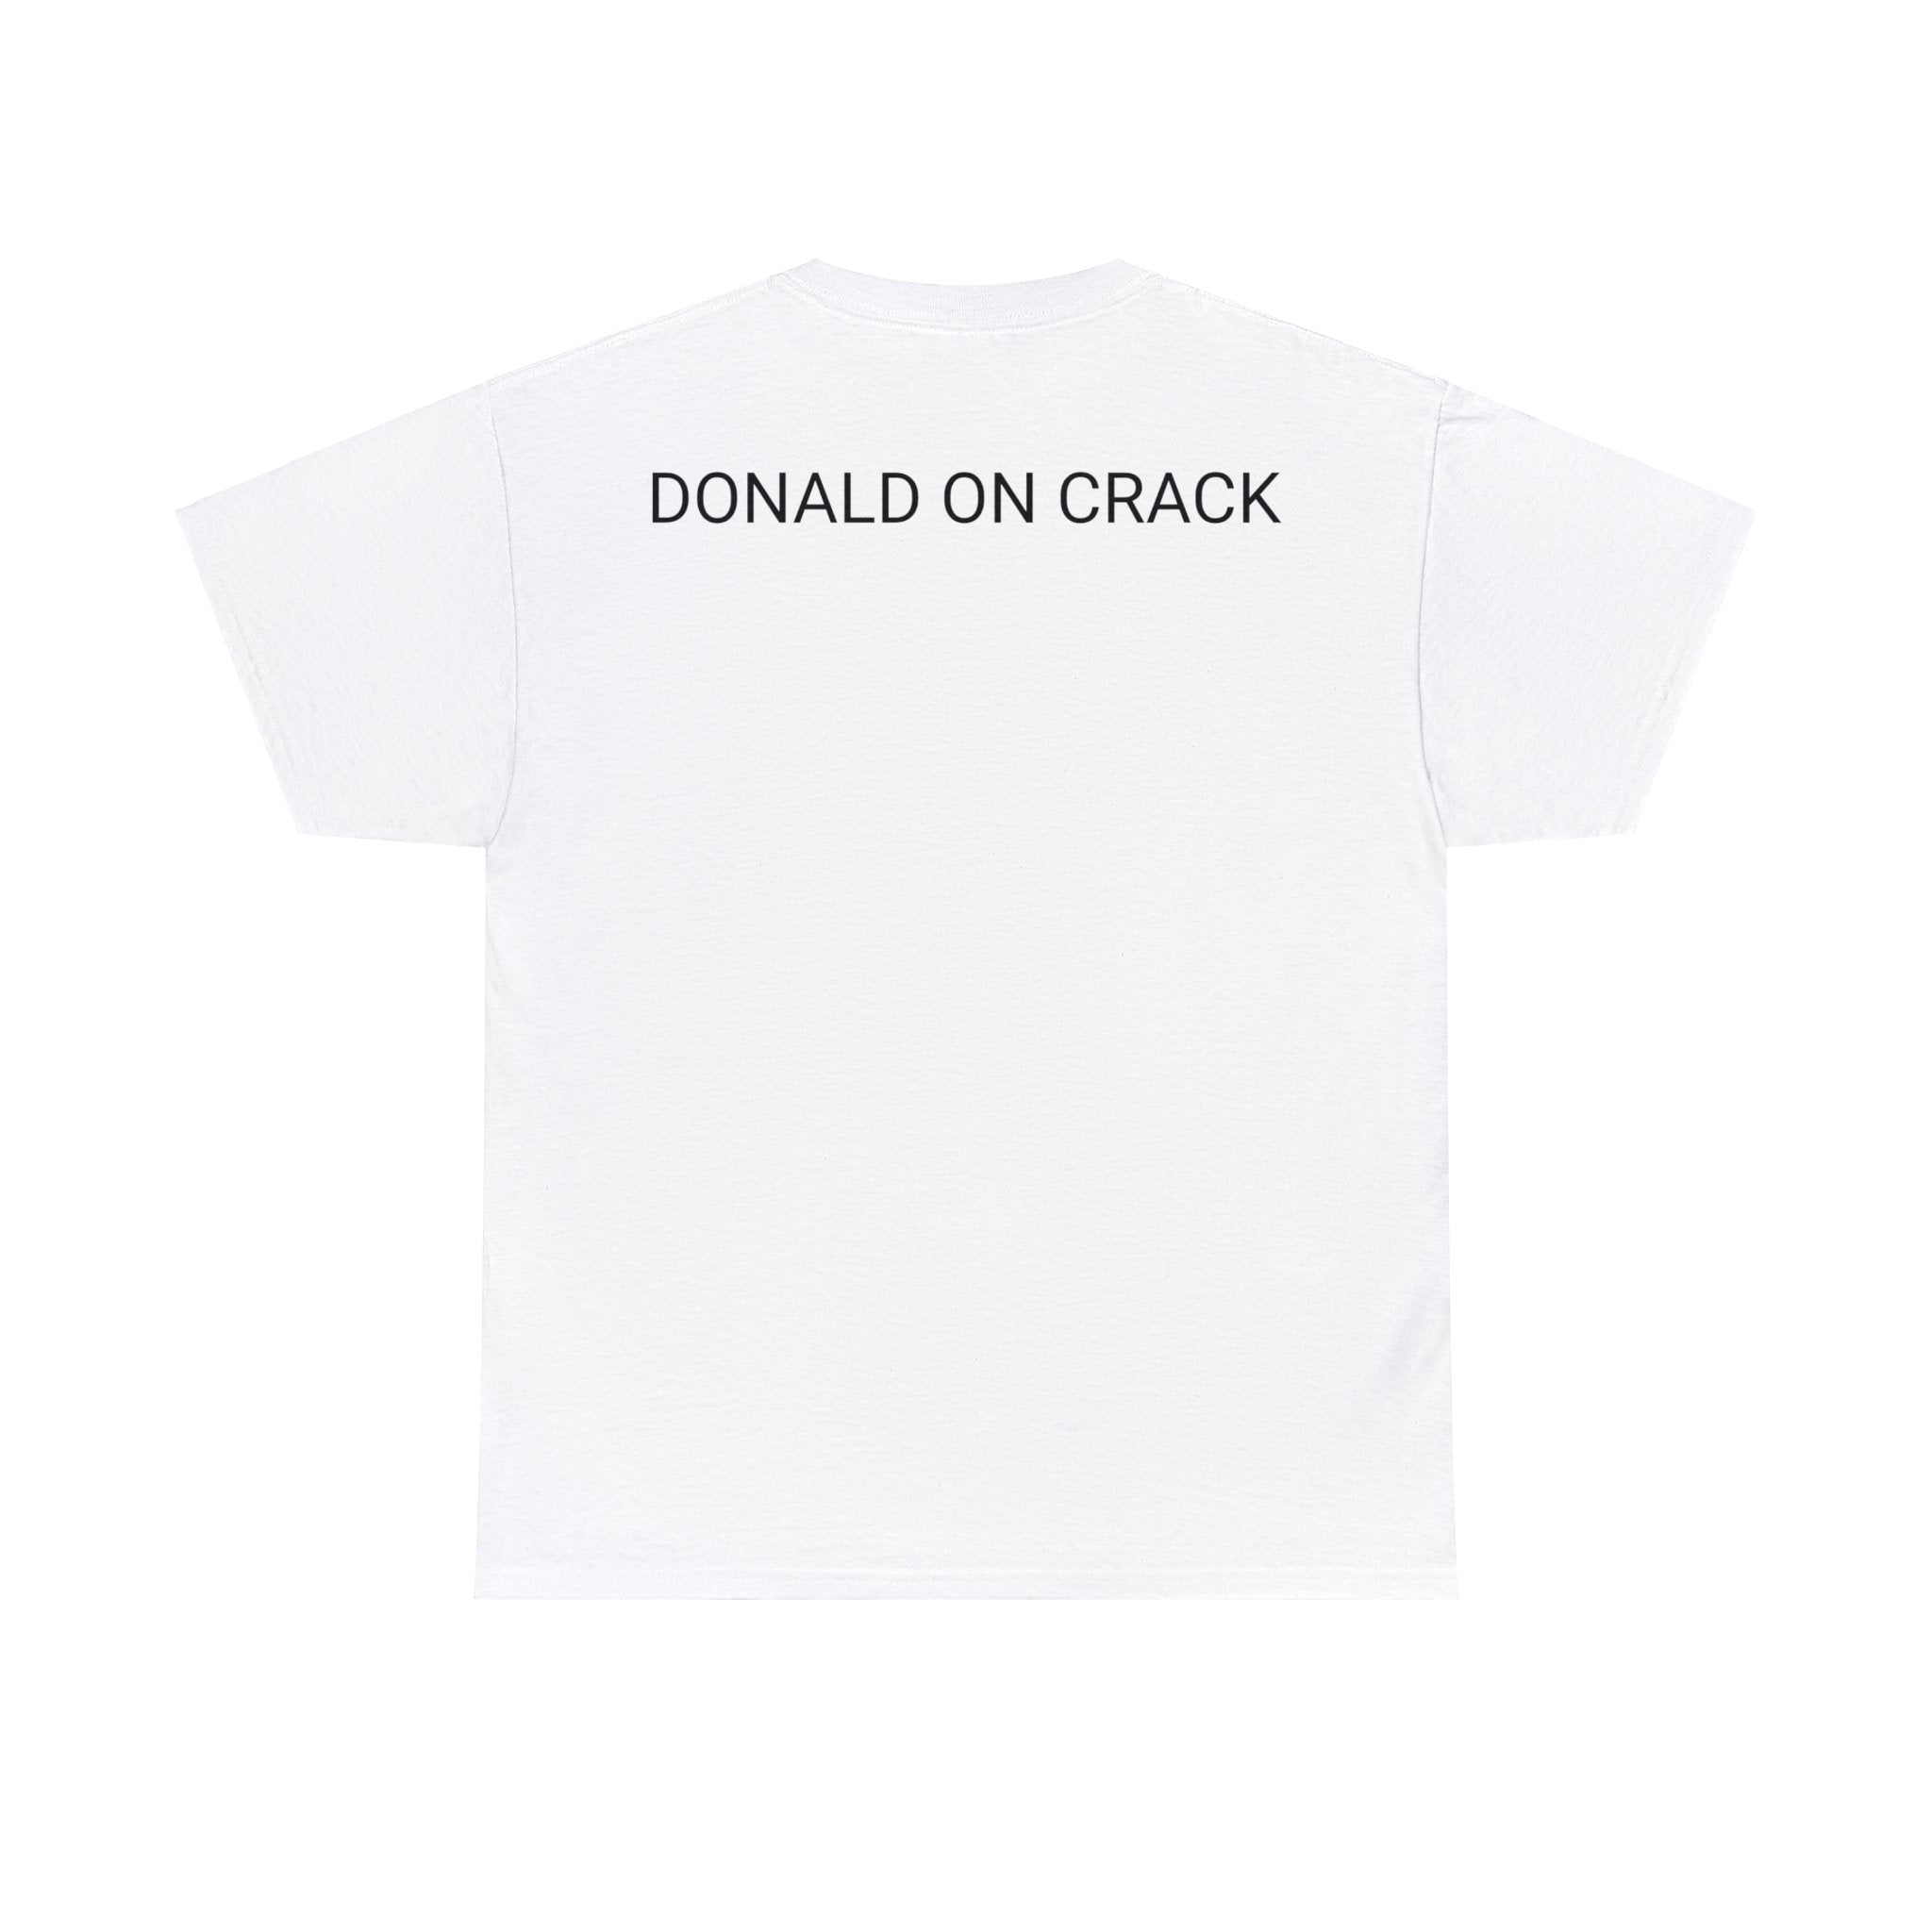 "DONALD ON CRACK" T-Shirt